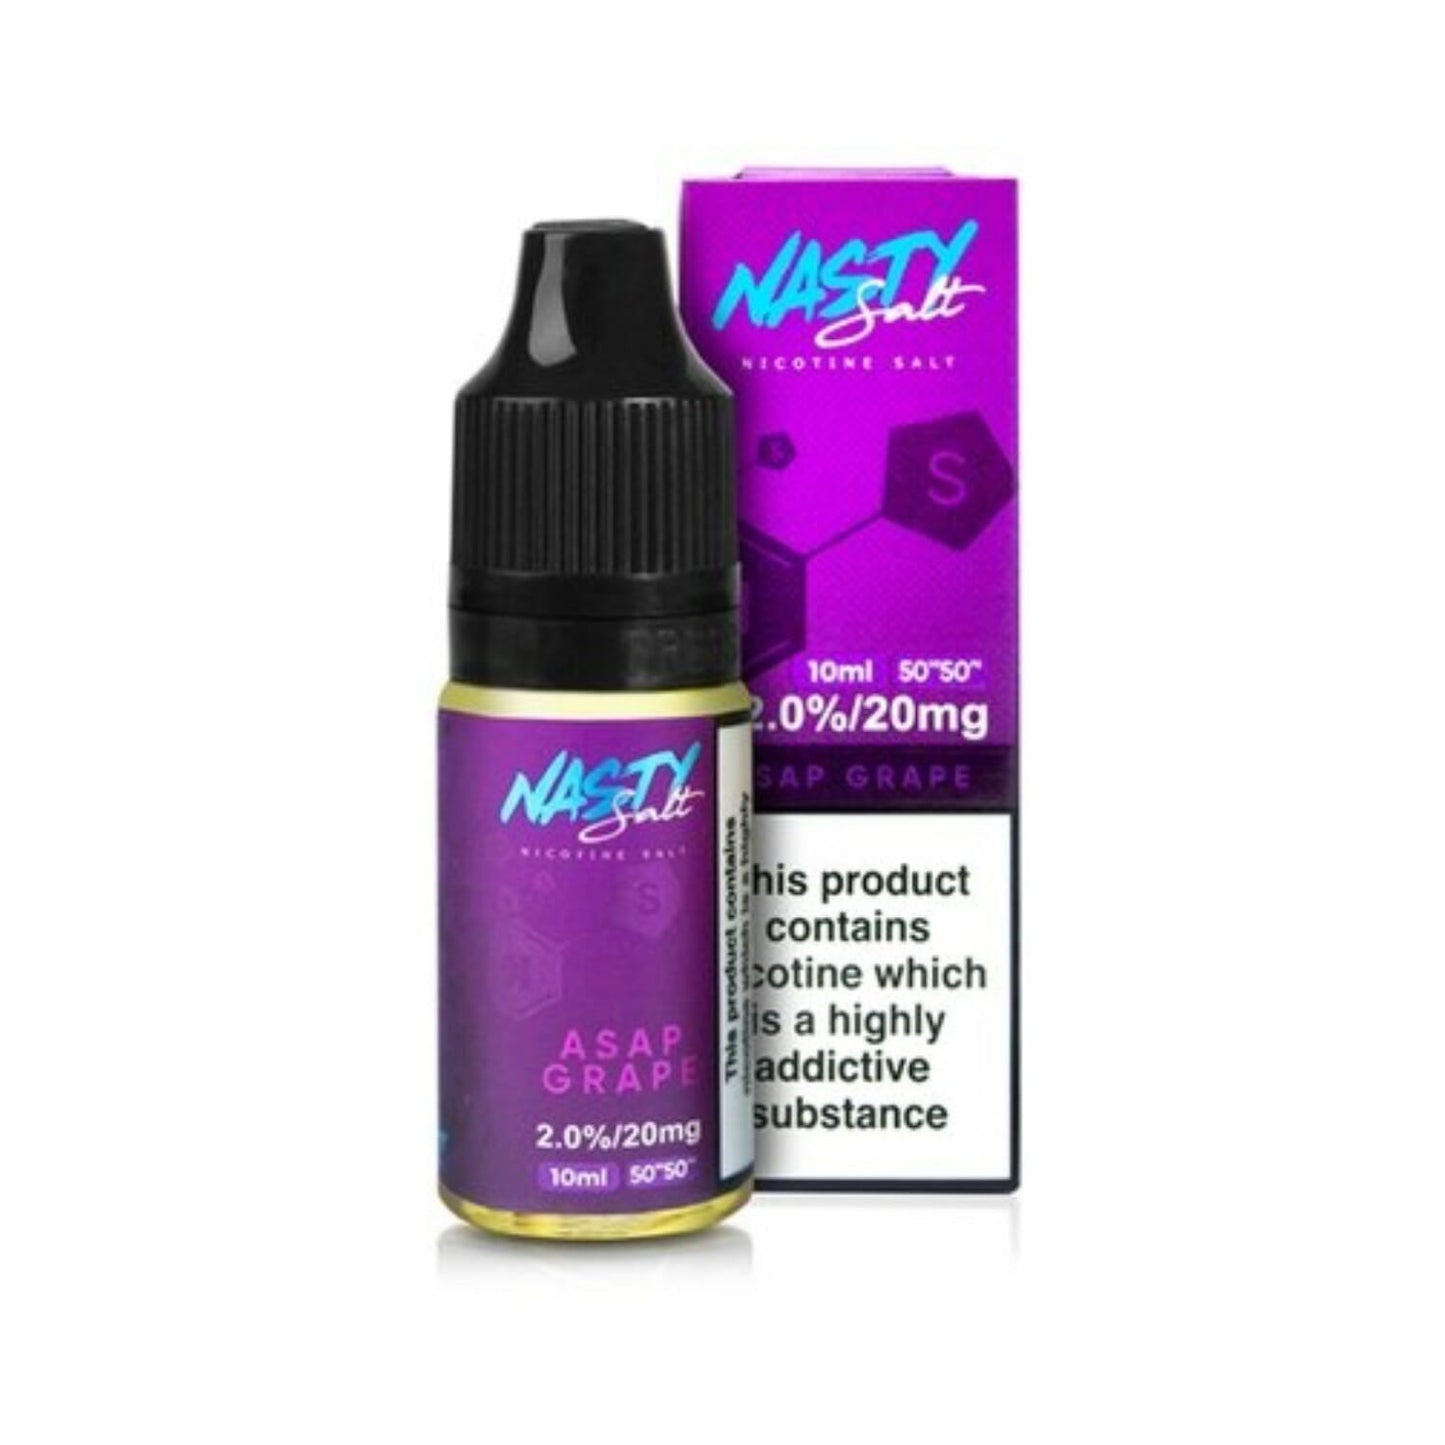 Nasty Juice - Nic Salt - Asap Grape